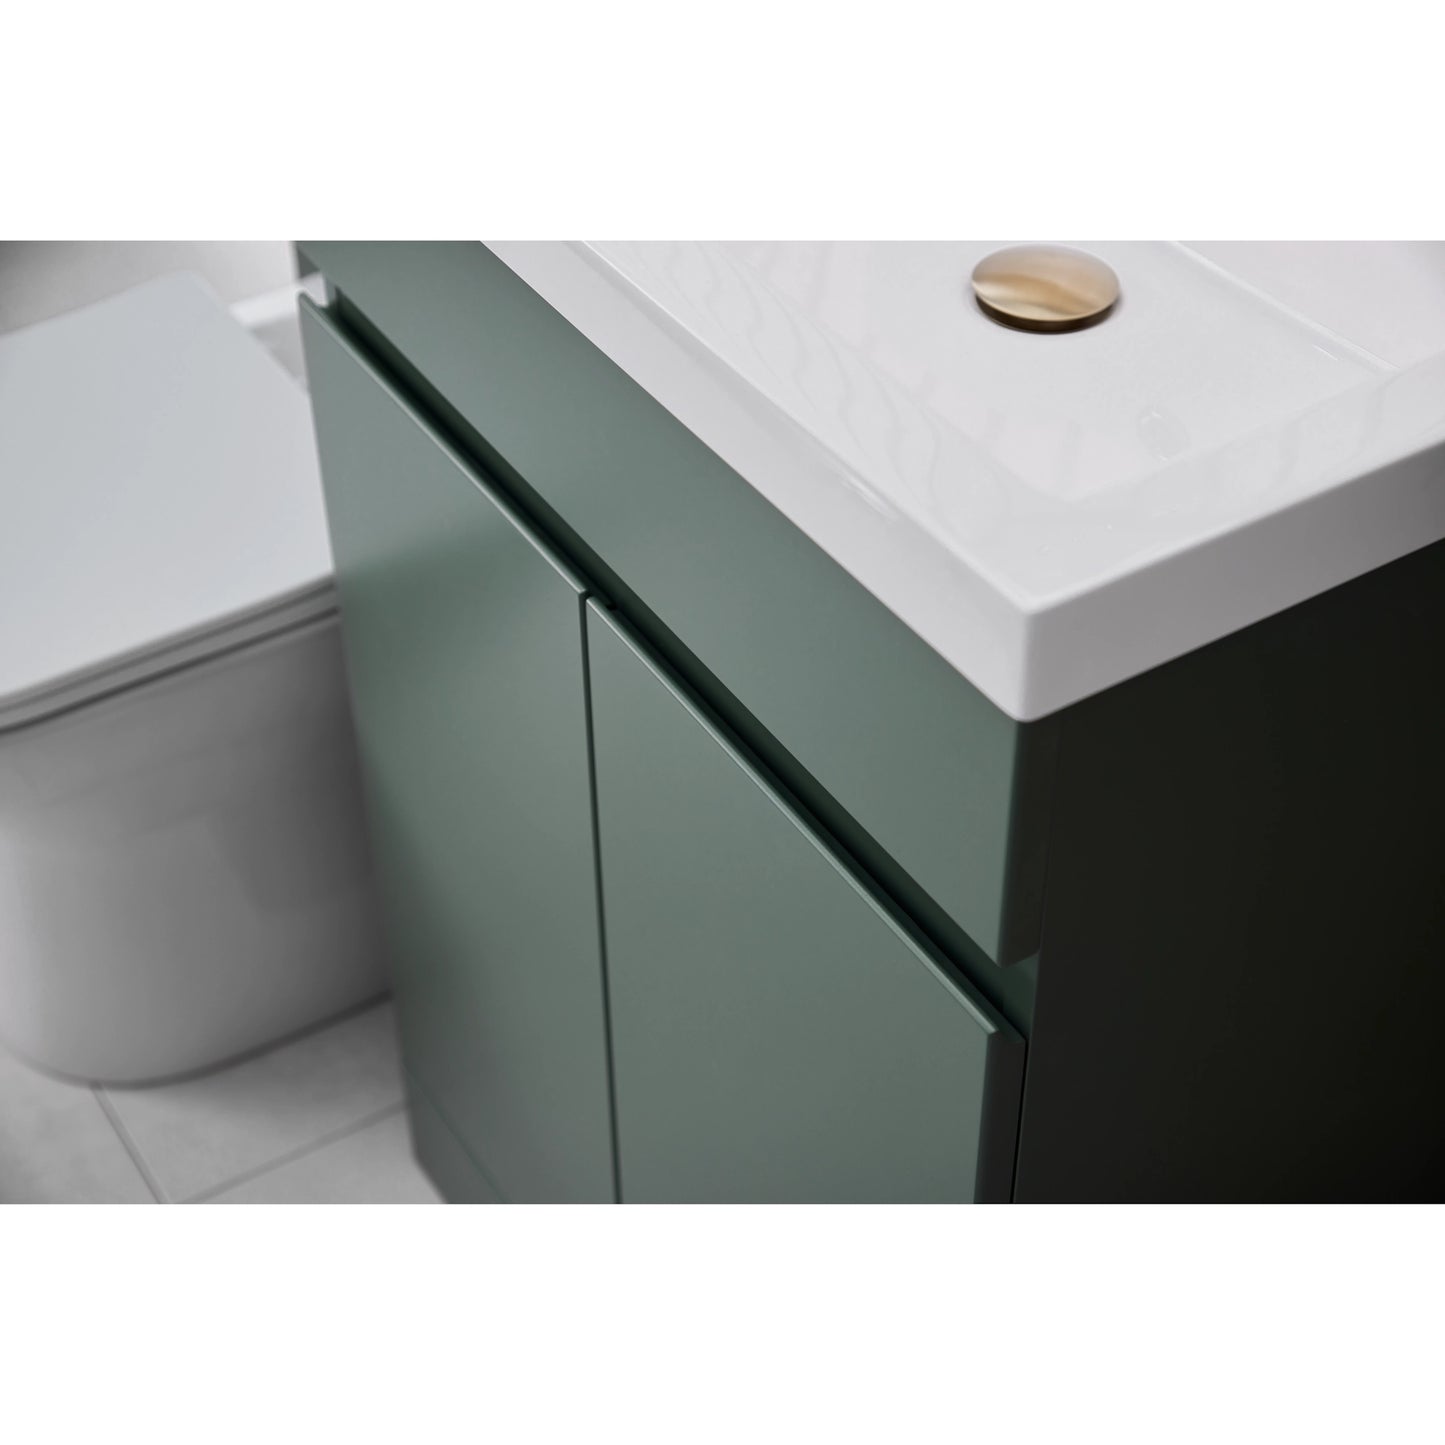 Empire L Shape Basin Sink Vanity Unit & WC Unit Furniture Set